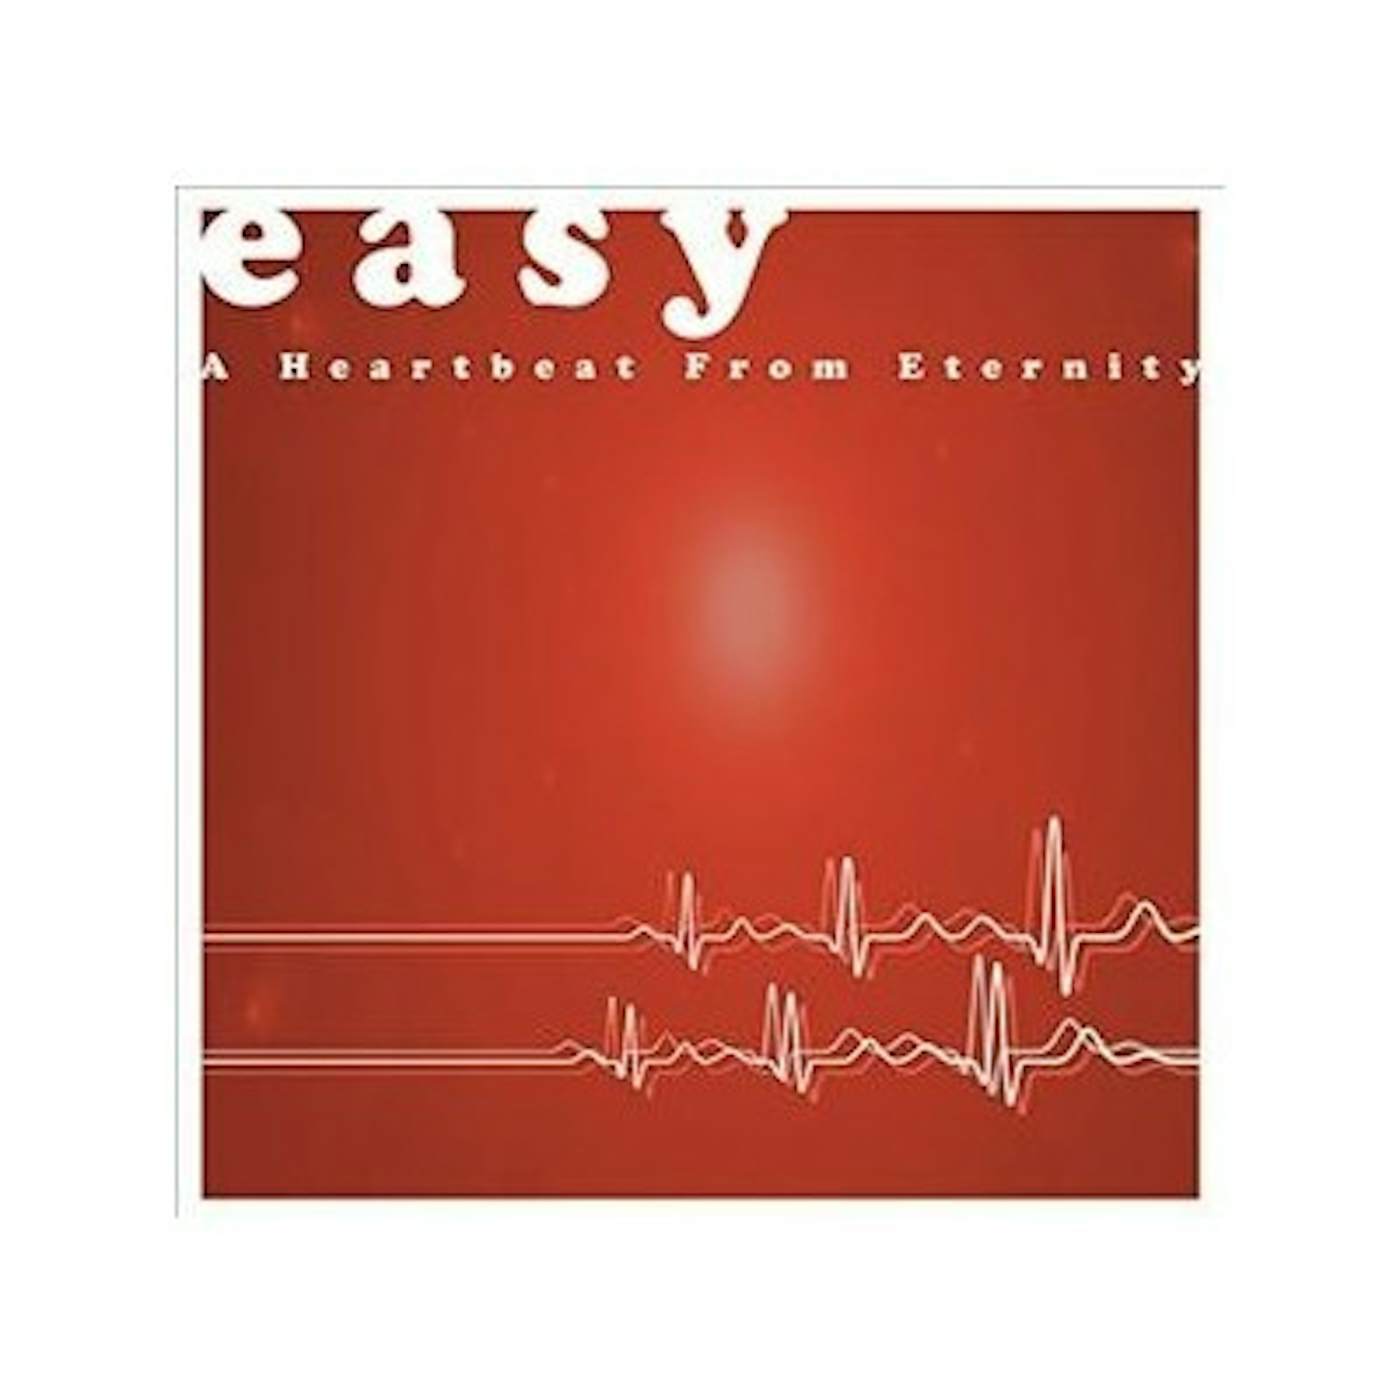 Easy Heartbeat From Eternity CD